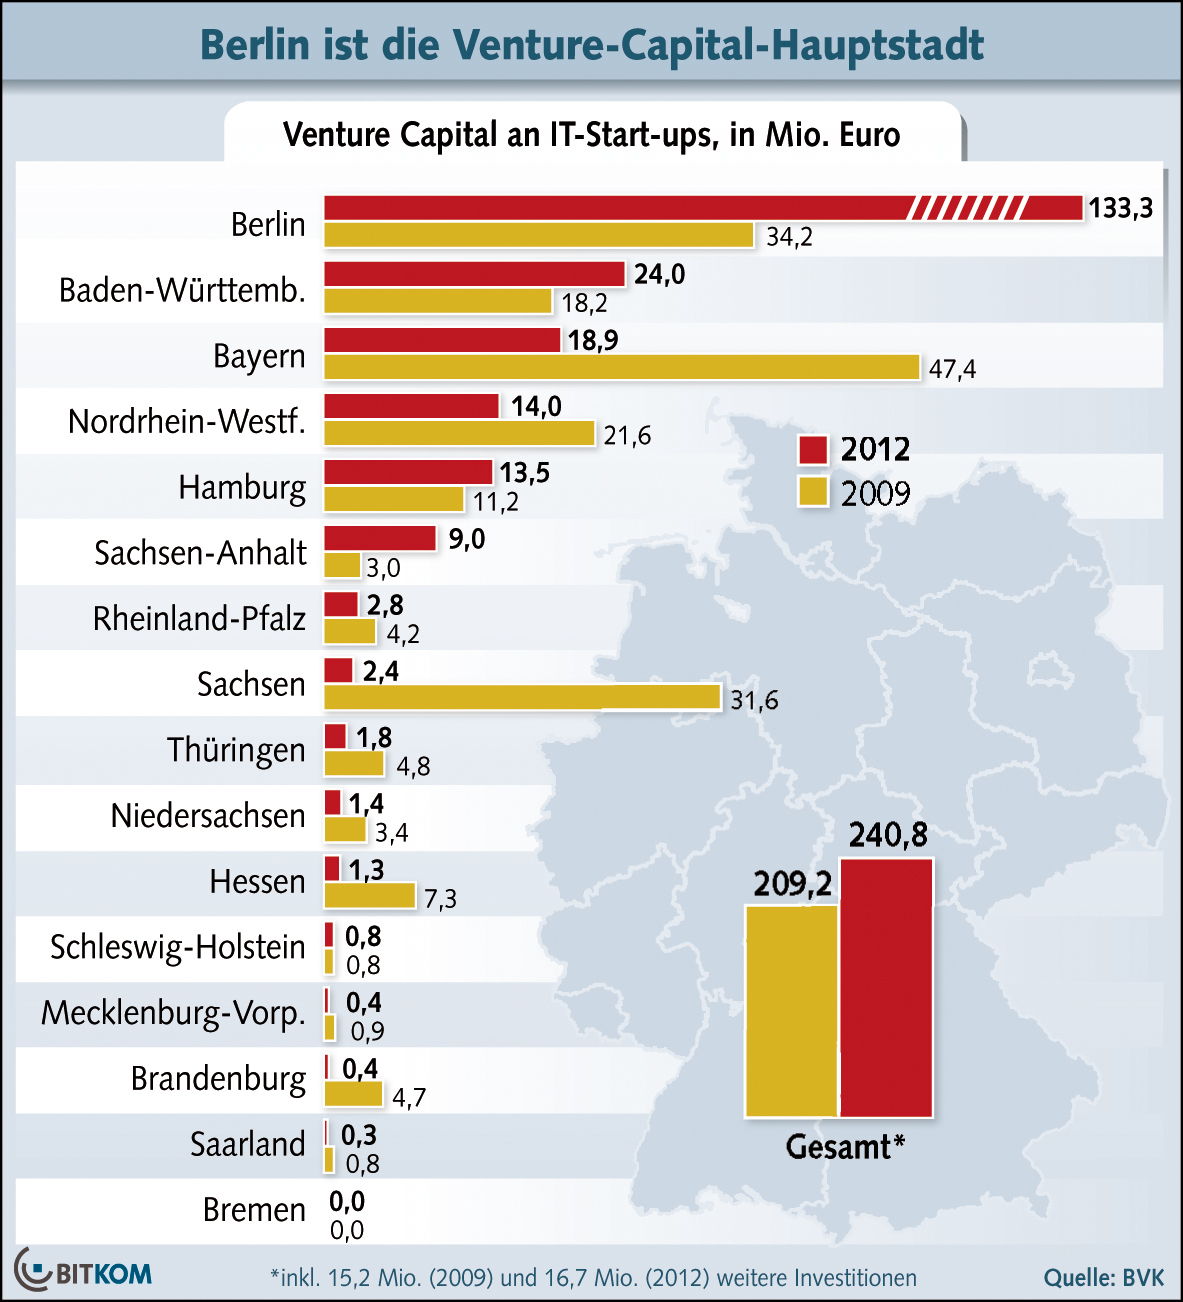 Weniger Venture-Capital – Berlin kriegt am Meisten